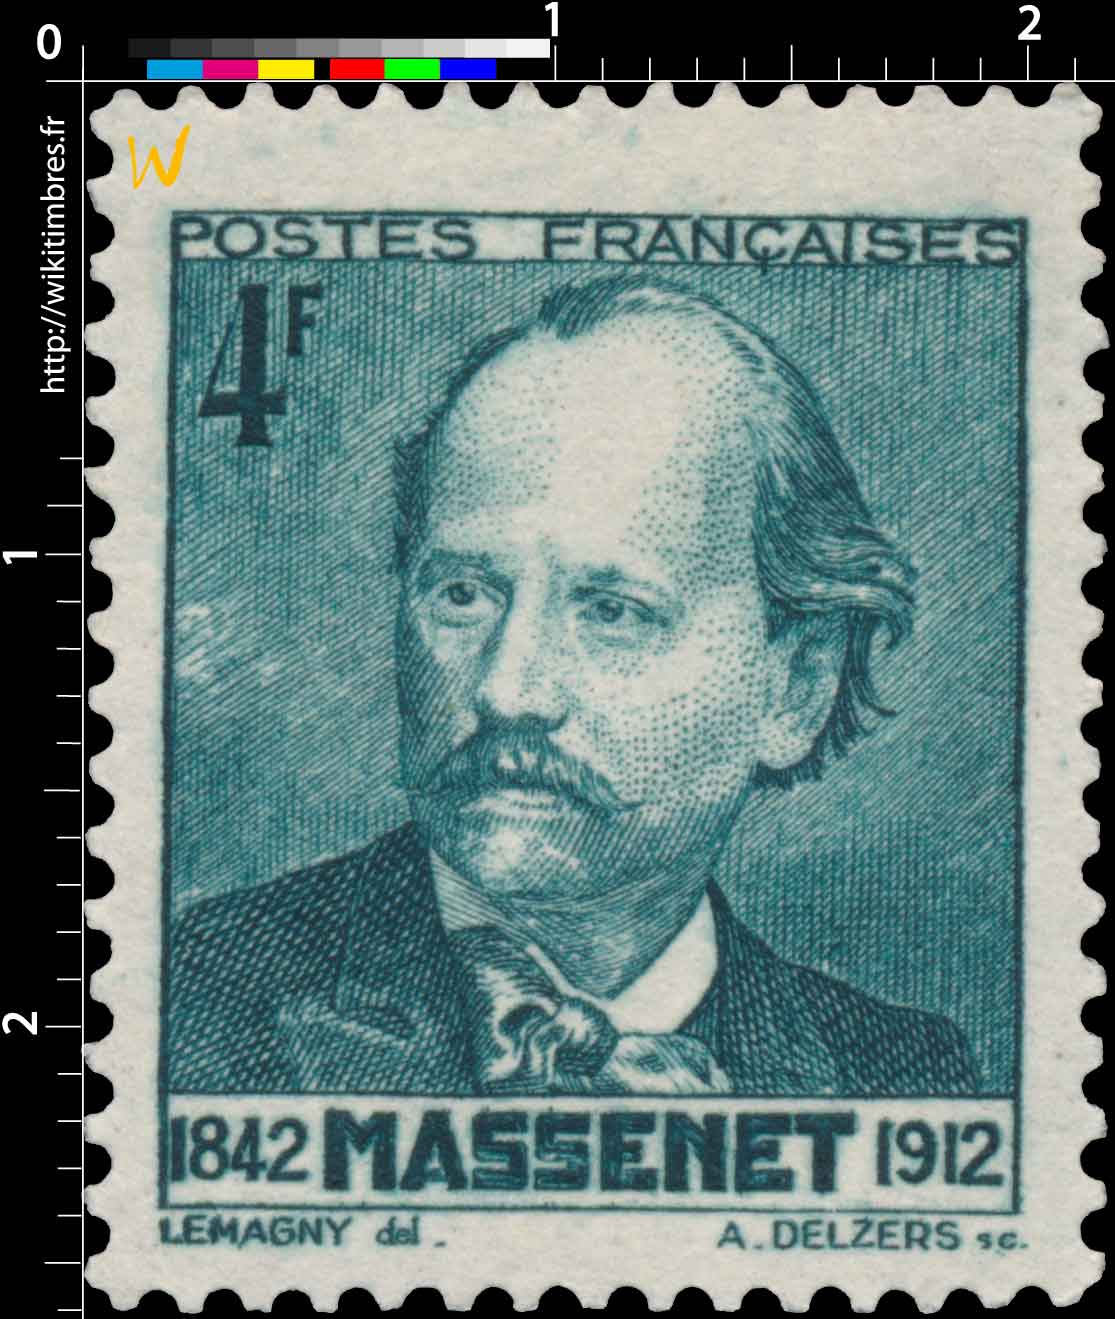 MASSENET 1842-1912